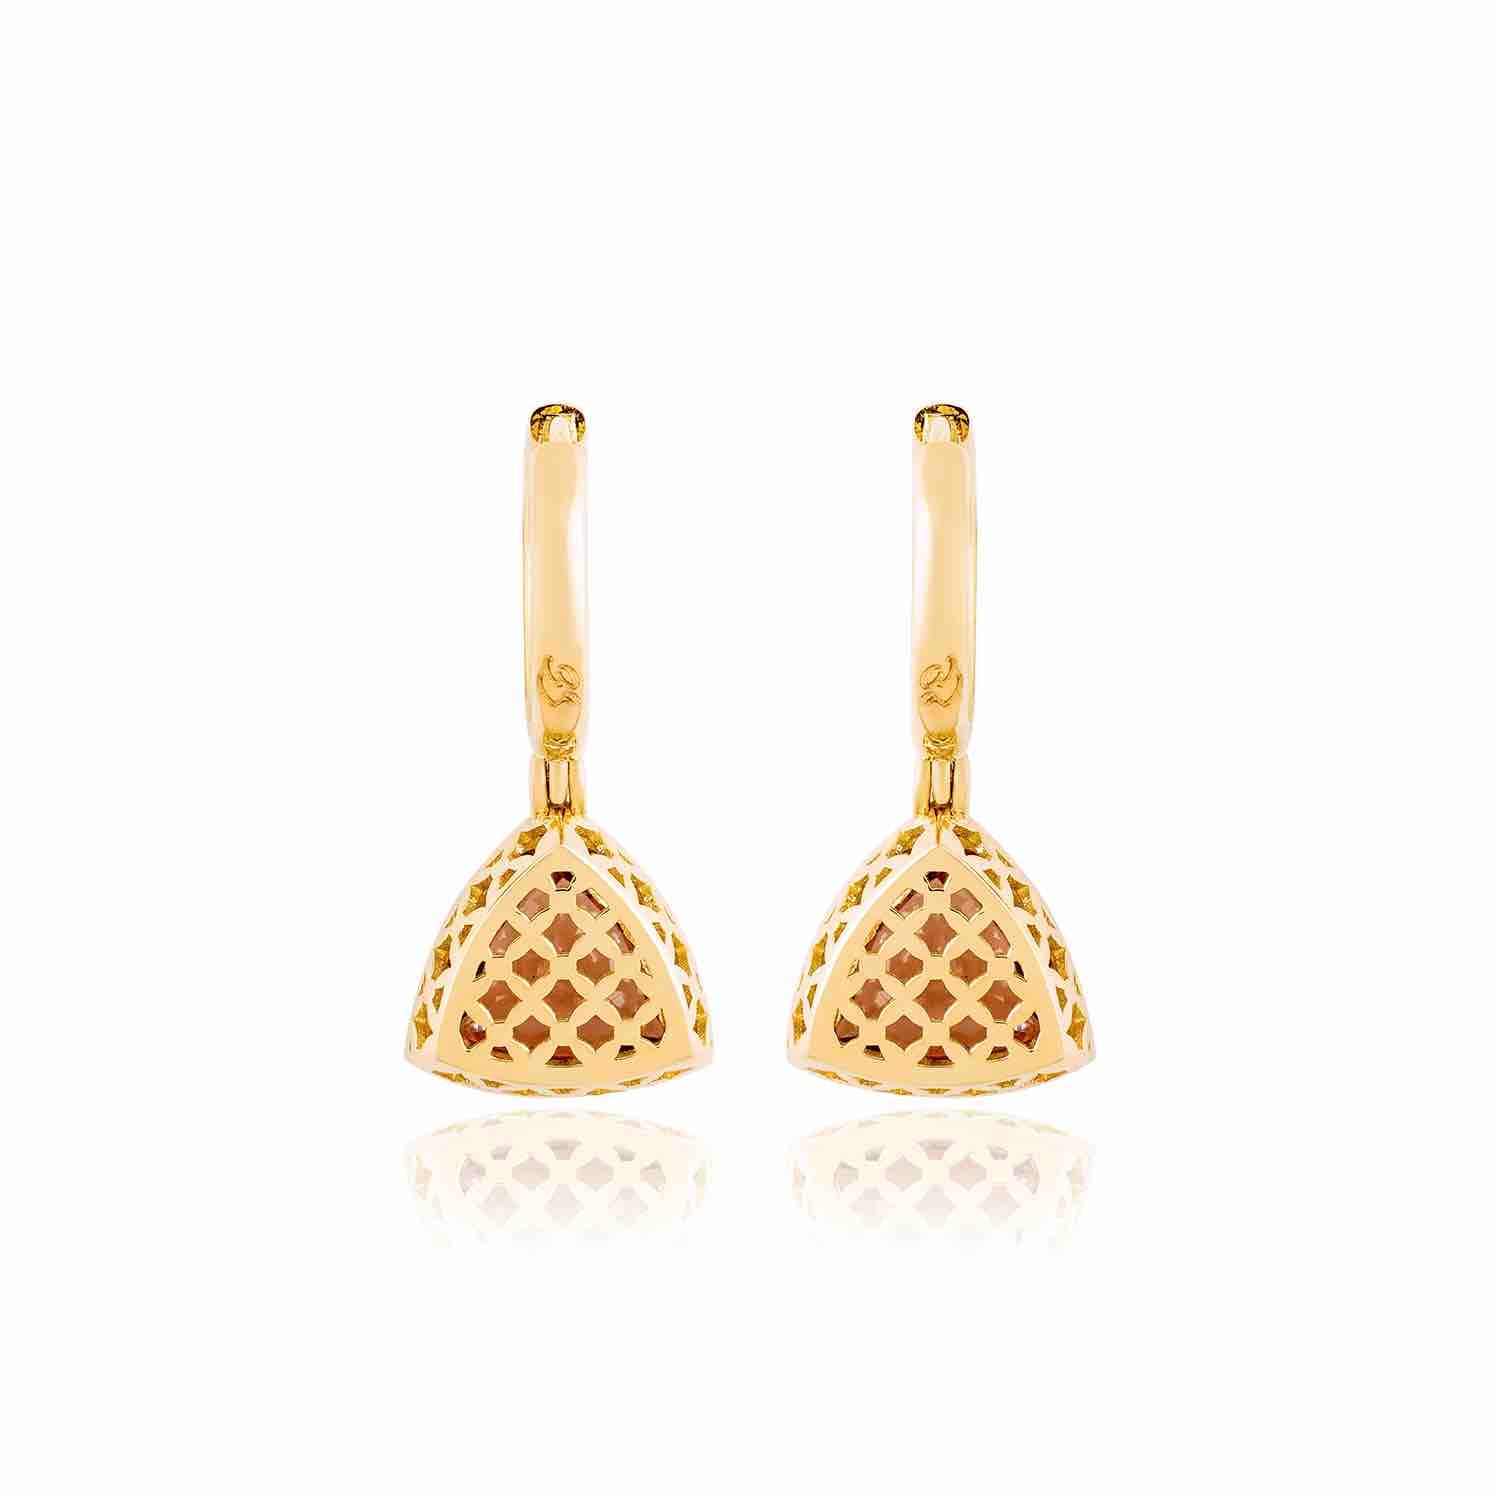 Triangle of Life, Gold Earrings, Diamond Earrings, 14K Gold Earrings, Gold Jewelry, Tourmaline Earrings, Gemstone Earrings